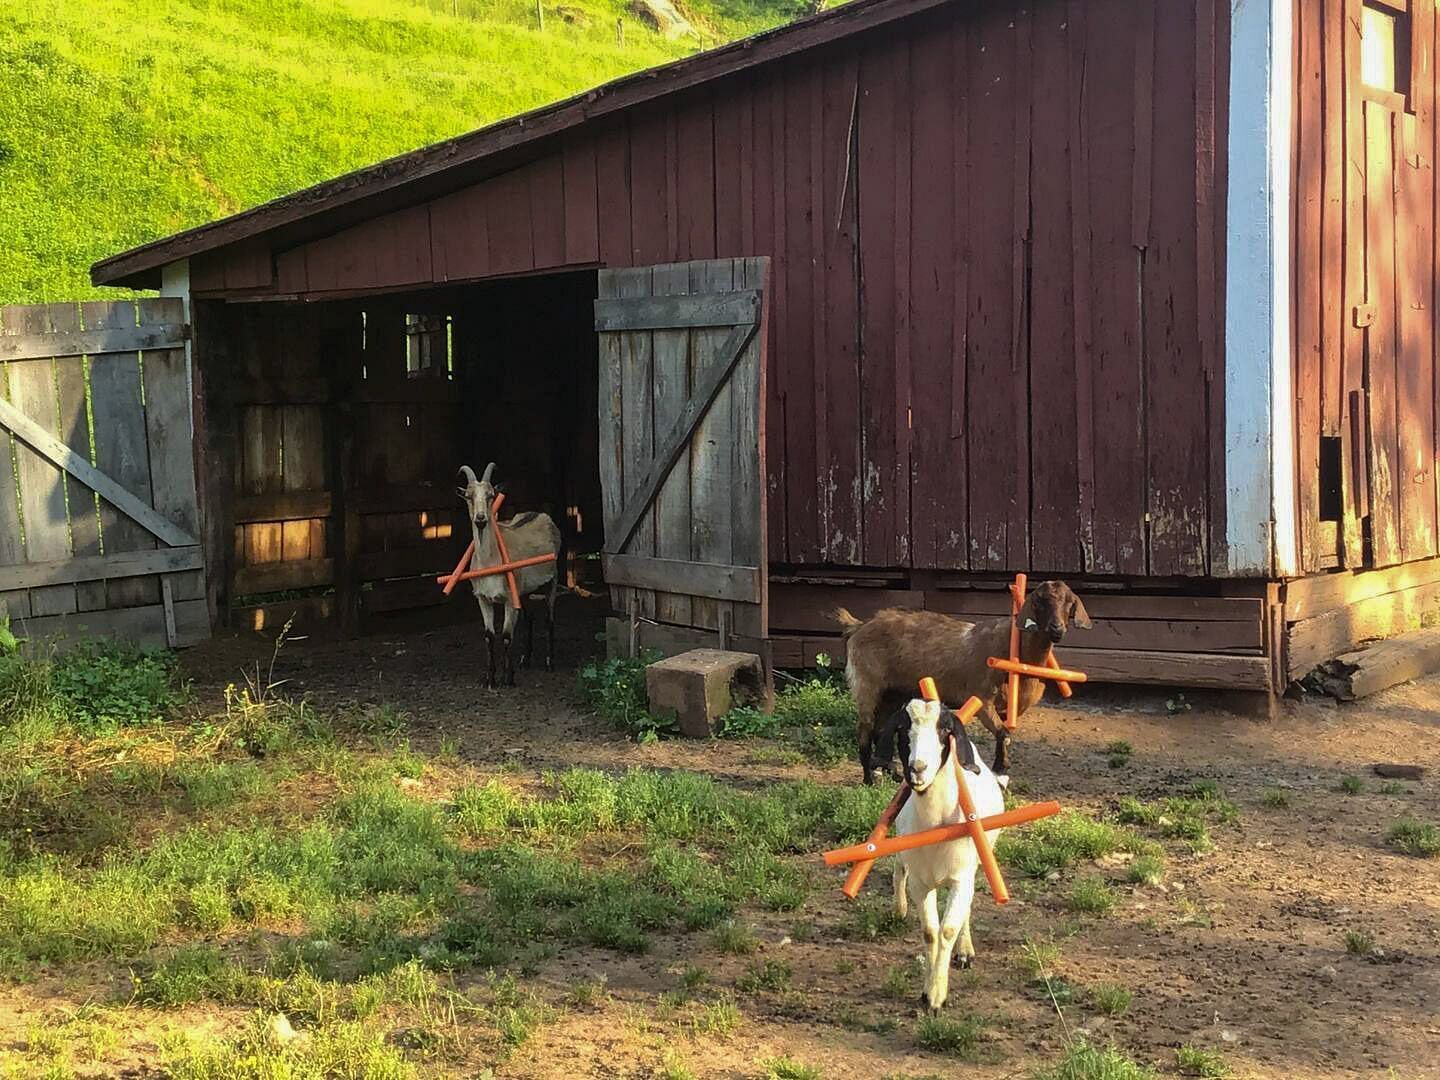 JWguest Residential Home at LeRoy, West Virginia | The Farm - Country Getaway | Jwbnb no brobnb 40